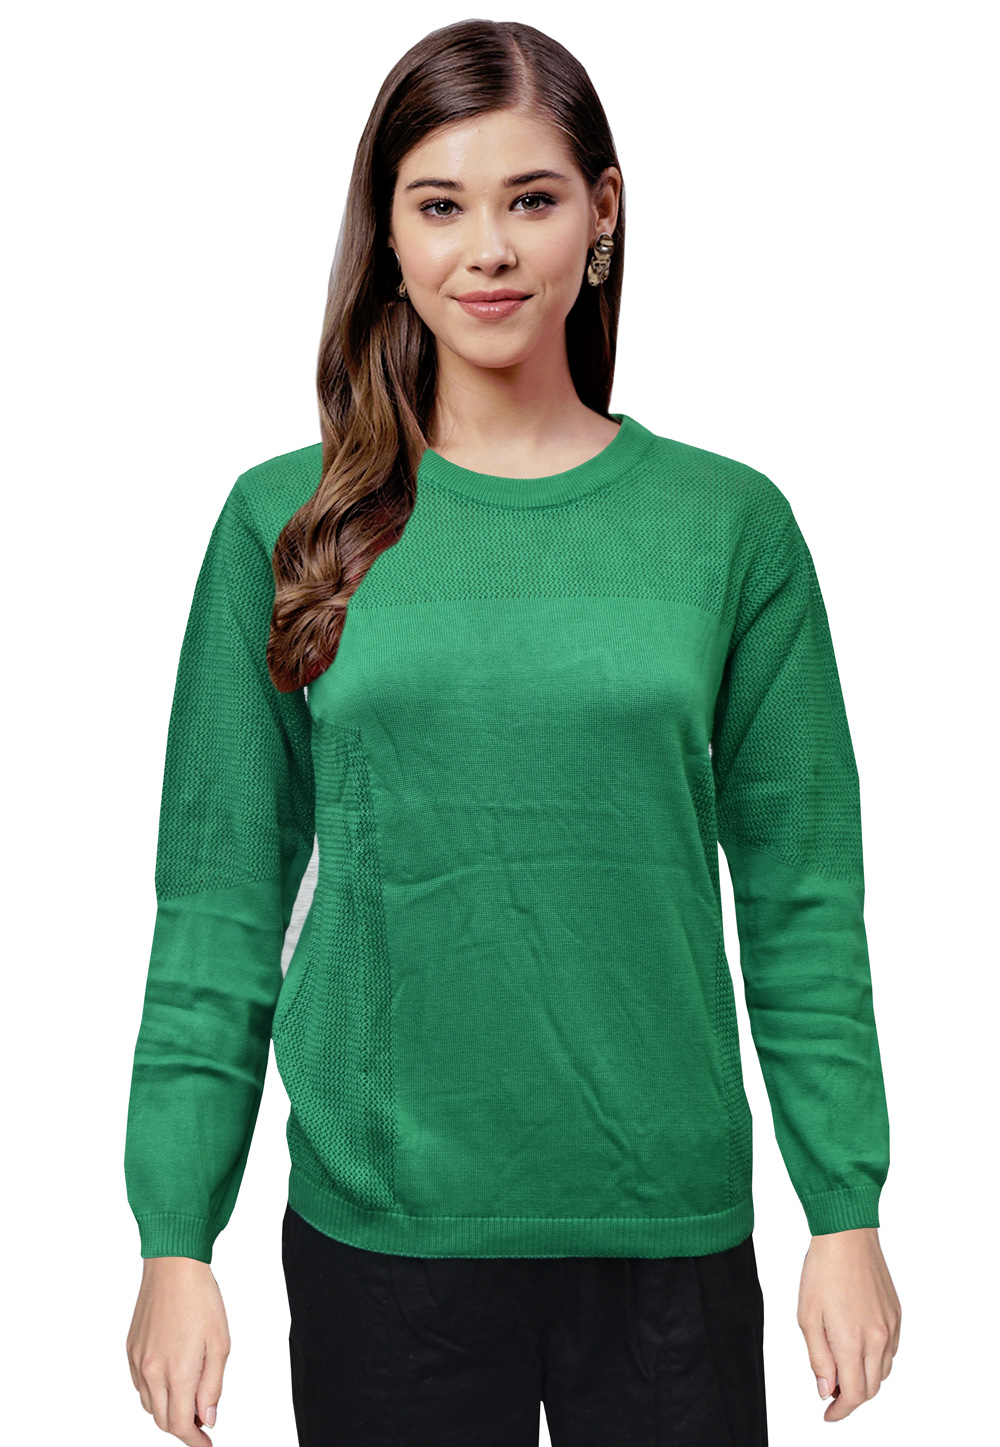 Green Woolen Knitted Sweater Tops 214249